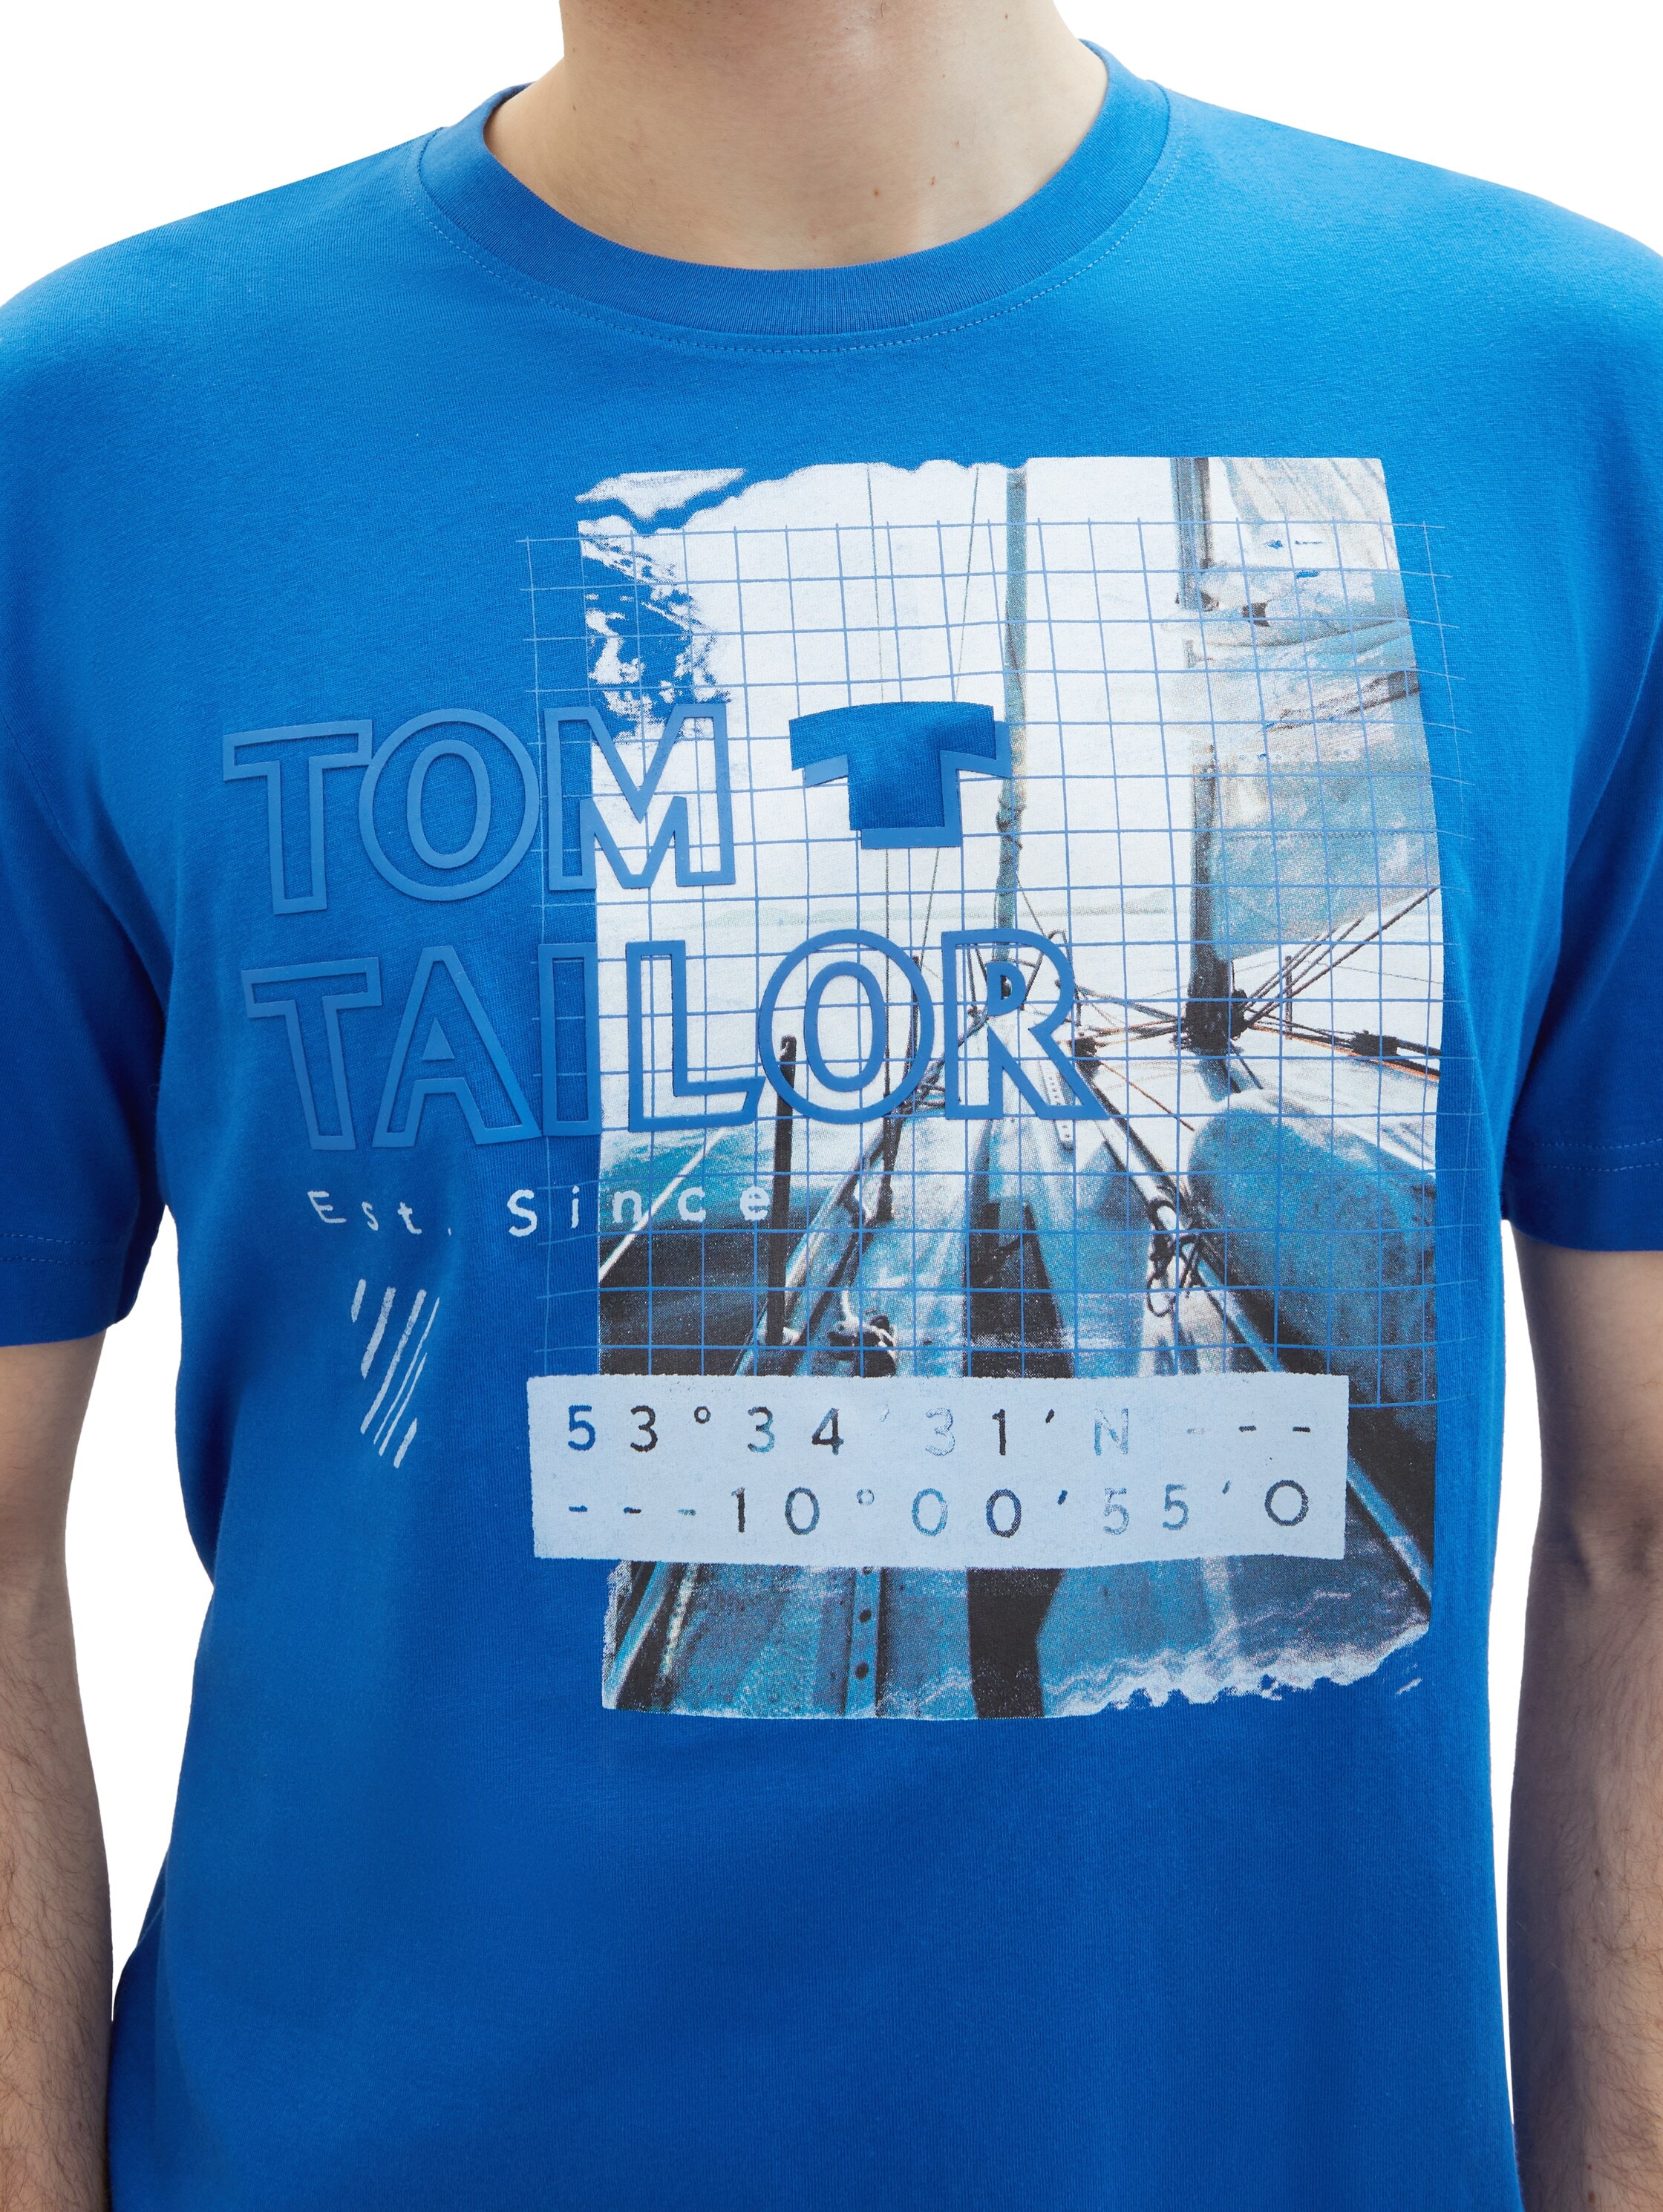 TOM TAILOR Print-Shirt, aus atmungsaktiver weicher Baumwolle